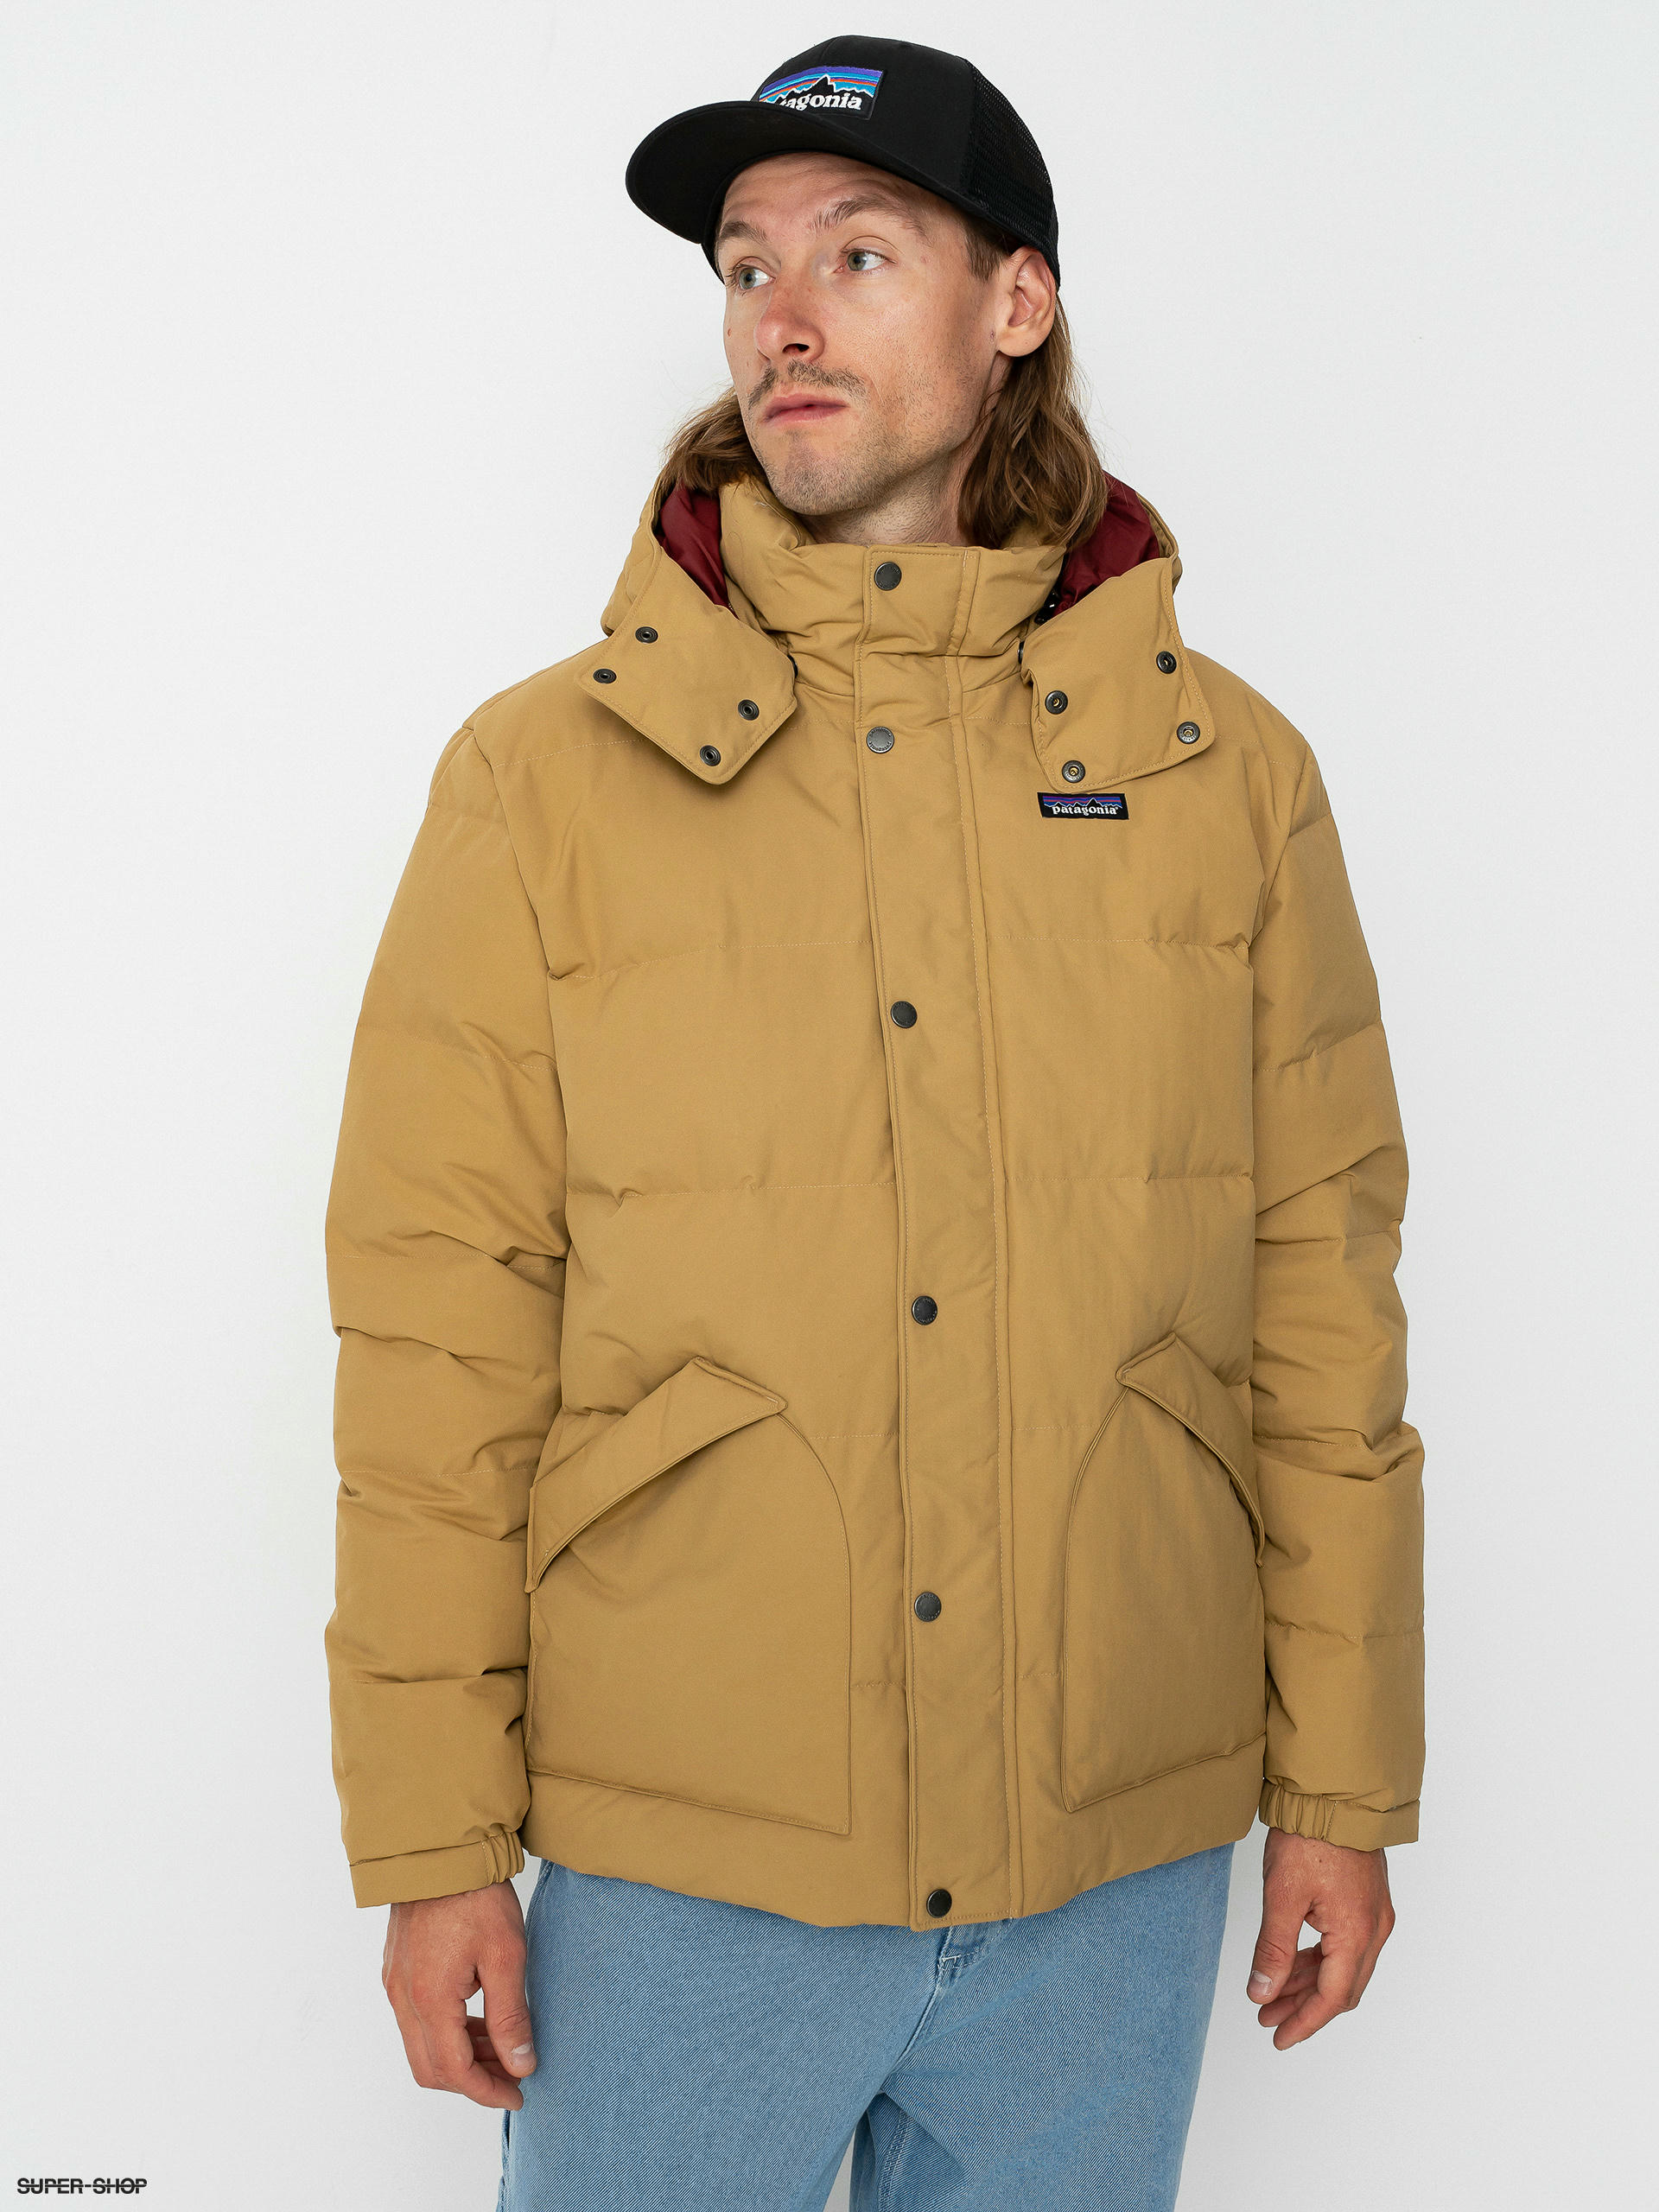 Patagonia Downdrift Jacket - Winter jacket Men's